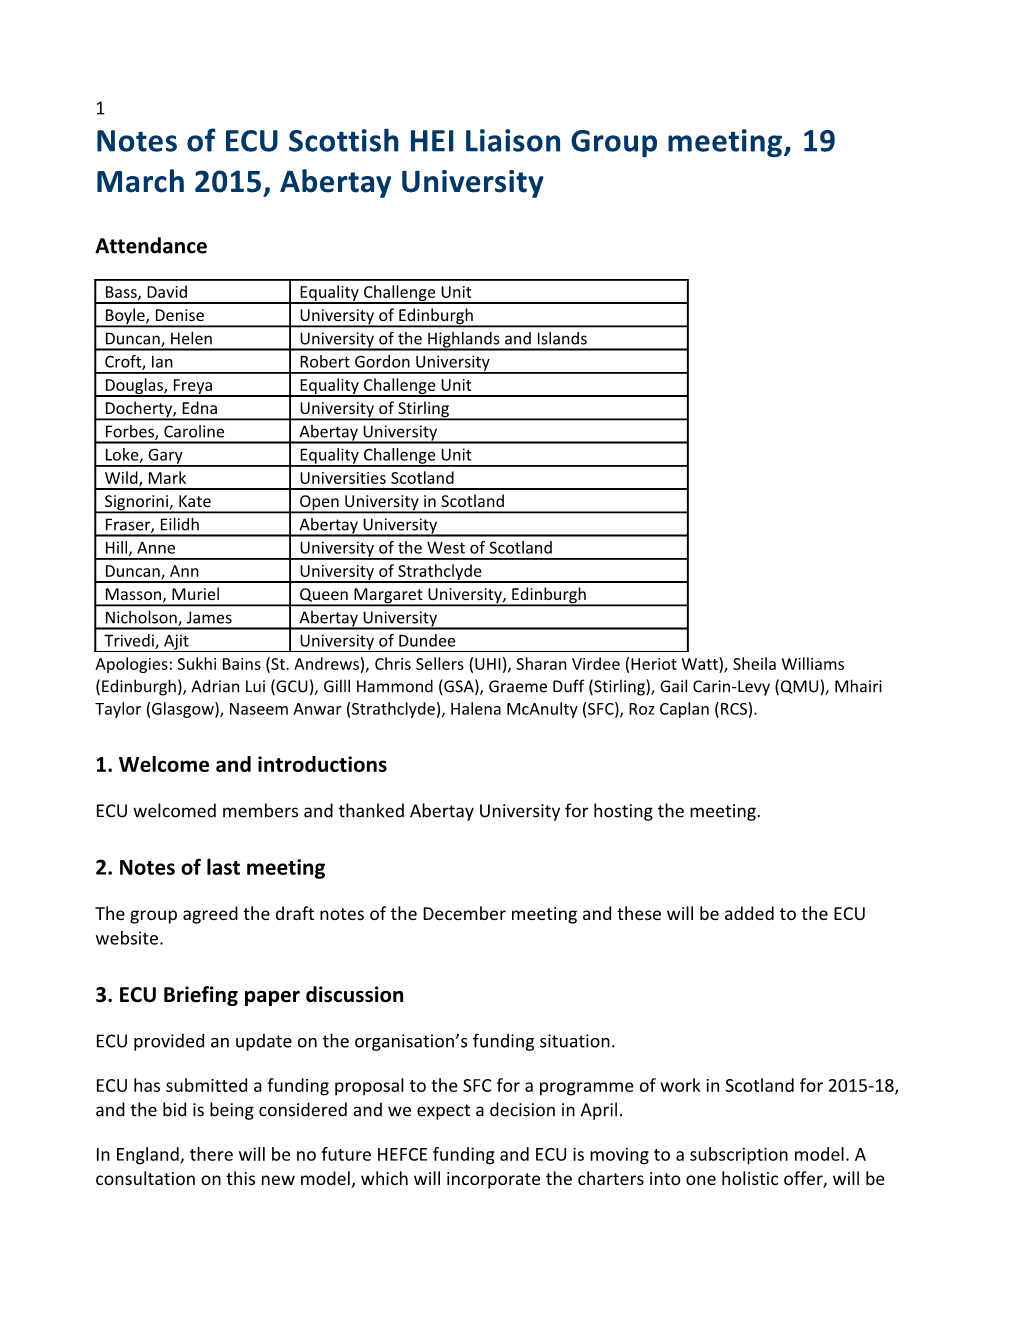 Notes of ECU Scottish HEI Liaison Group Meeting, 19March2015,Abertay University